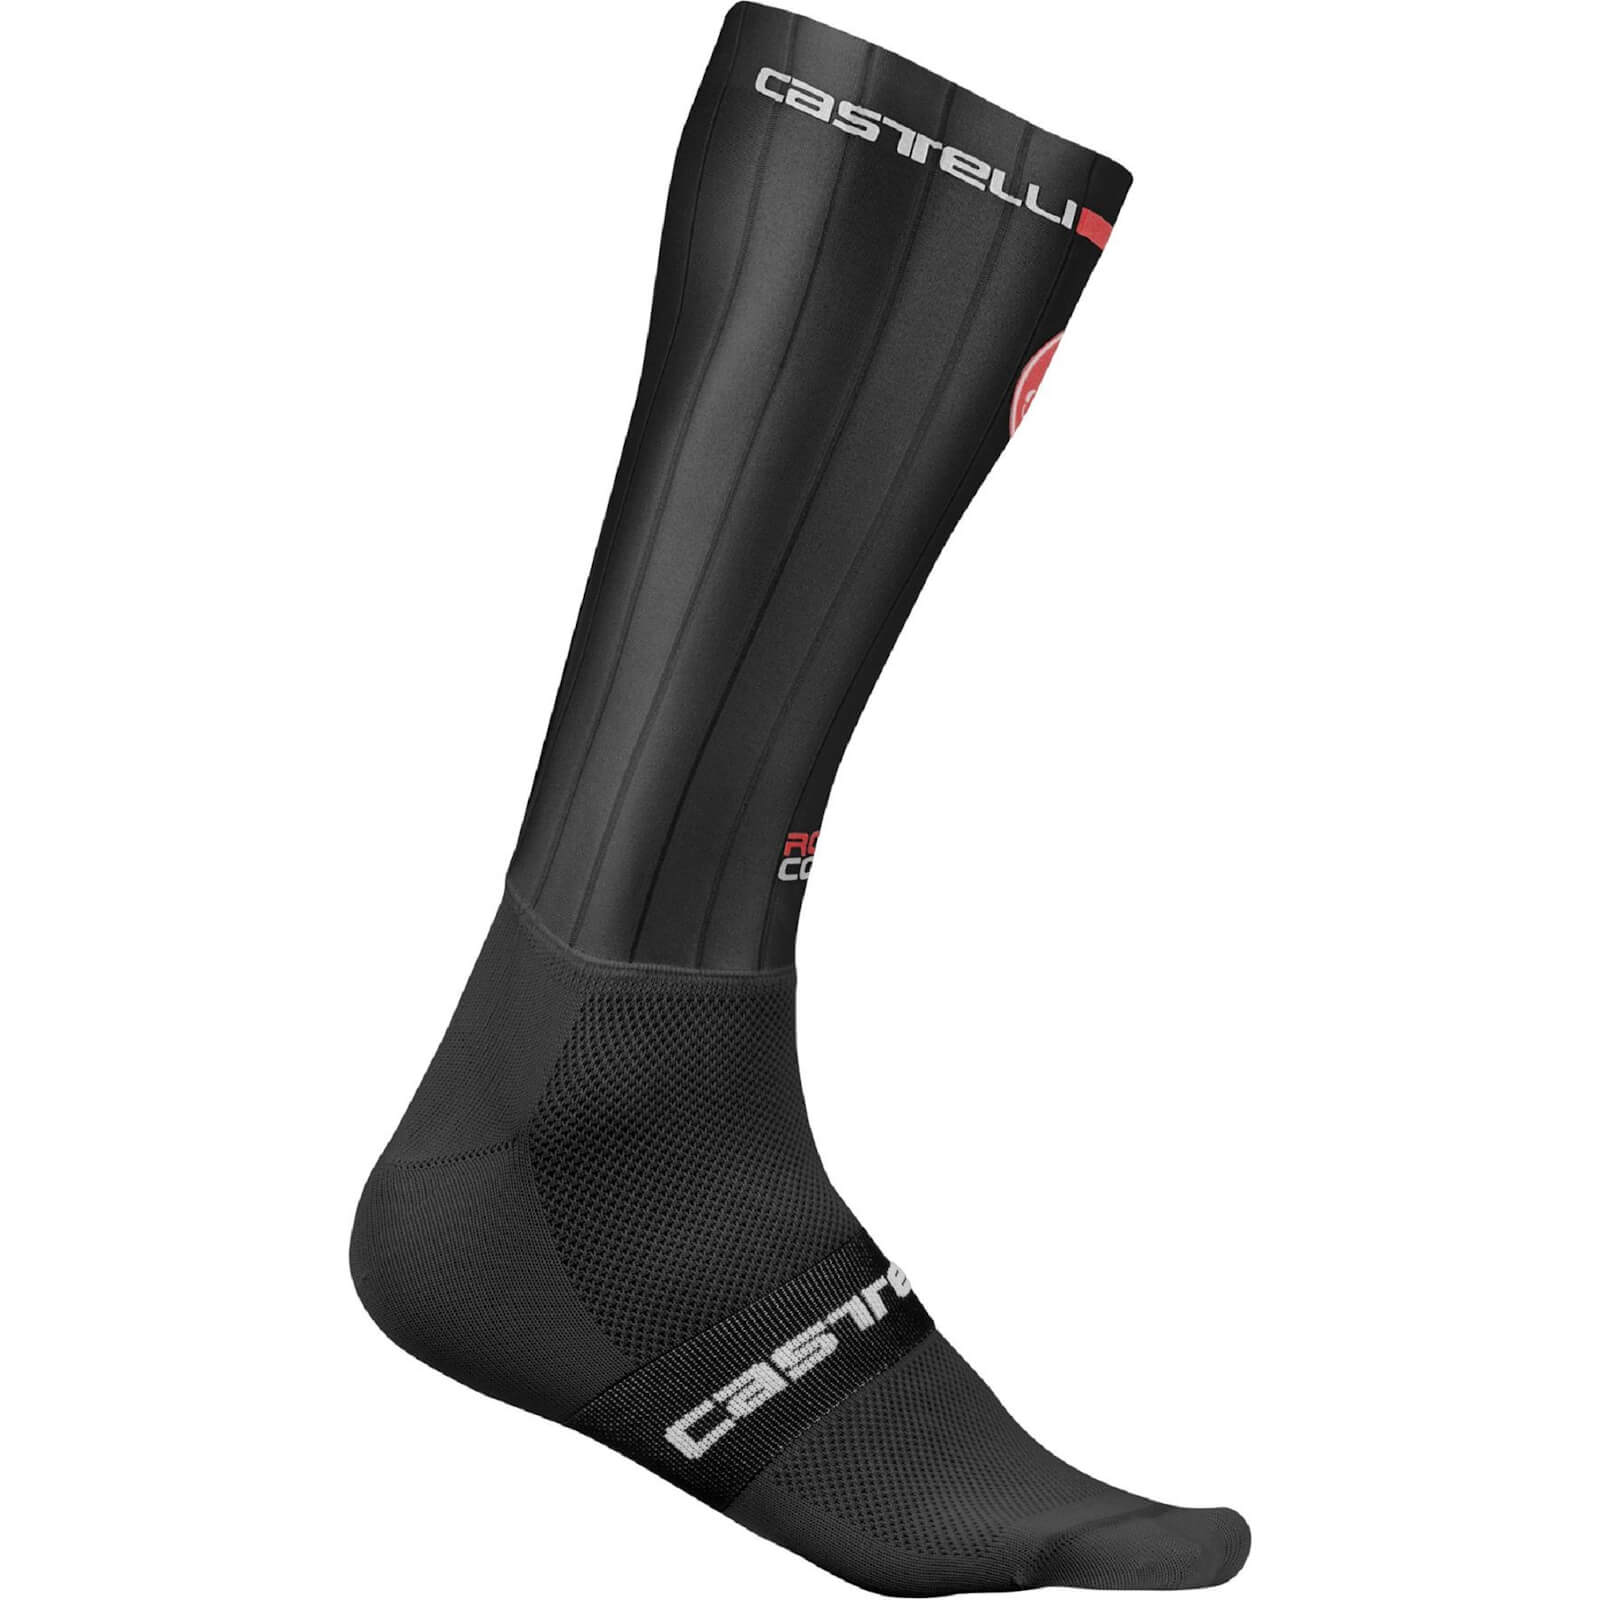 Castelli Fast Feet Socken - Weiss - L/XL - Schwarz